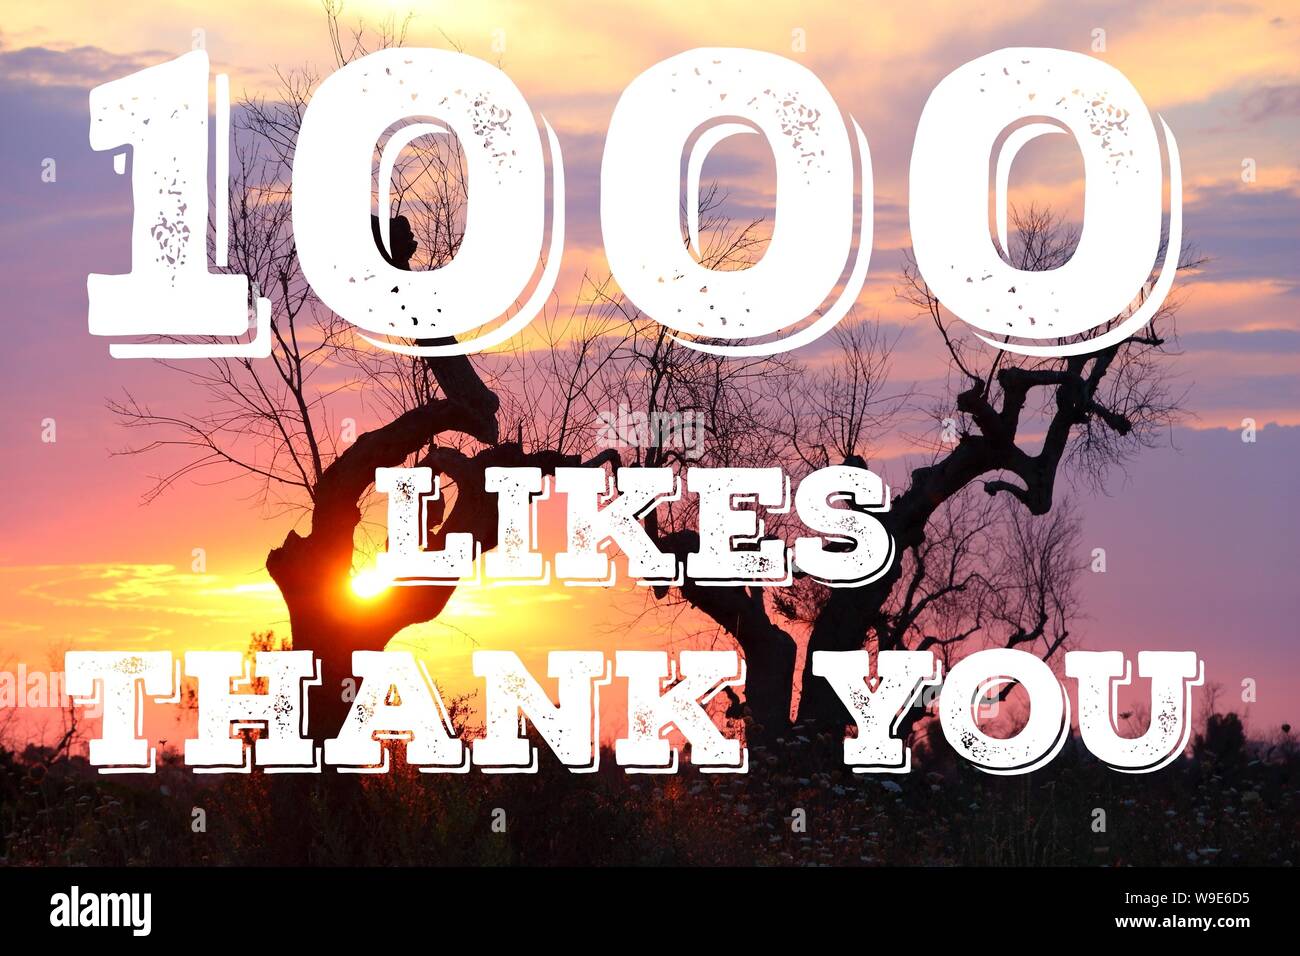 1000 likes - thank you banner. Social media milestone sign. Stock Photo